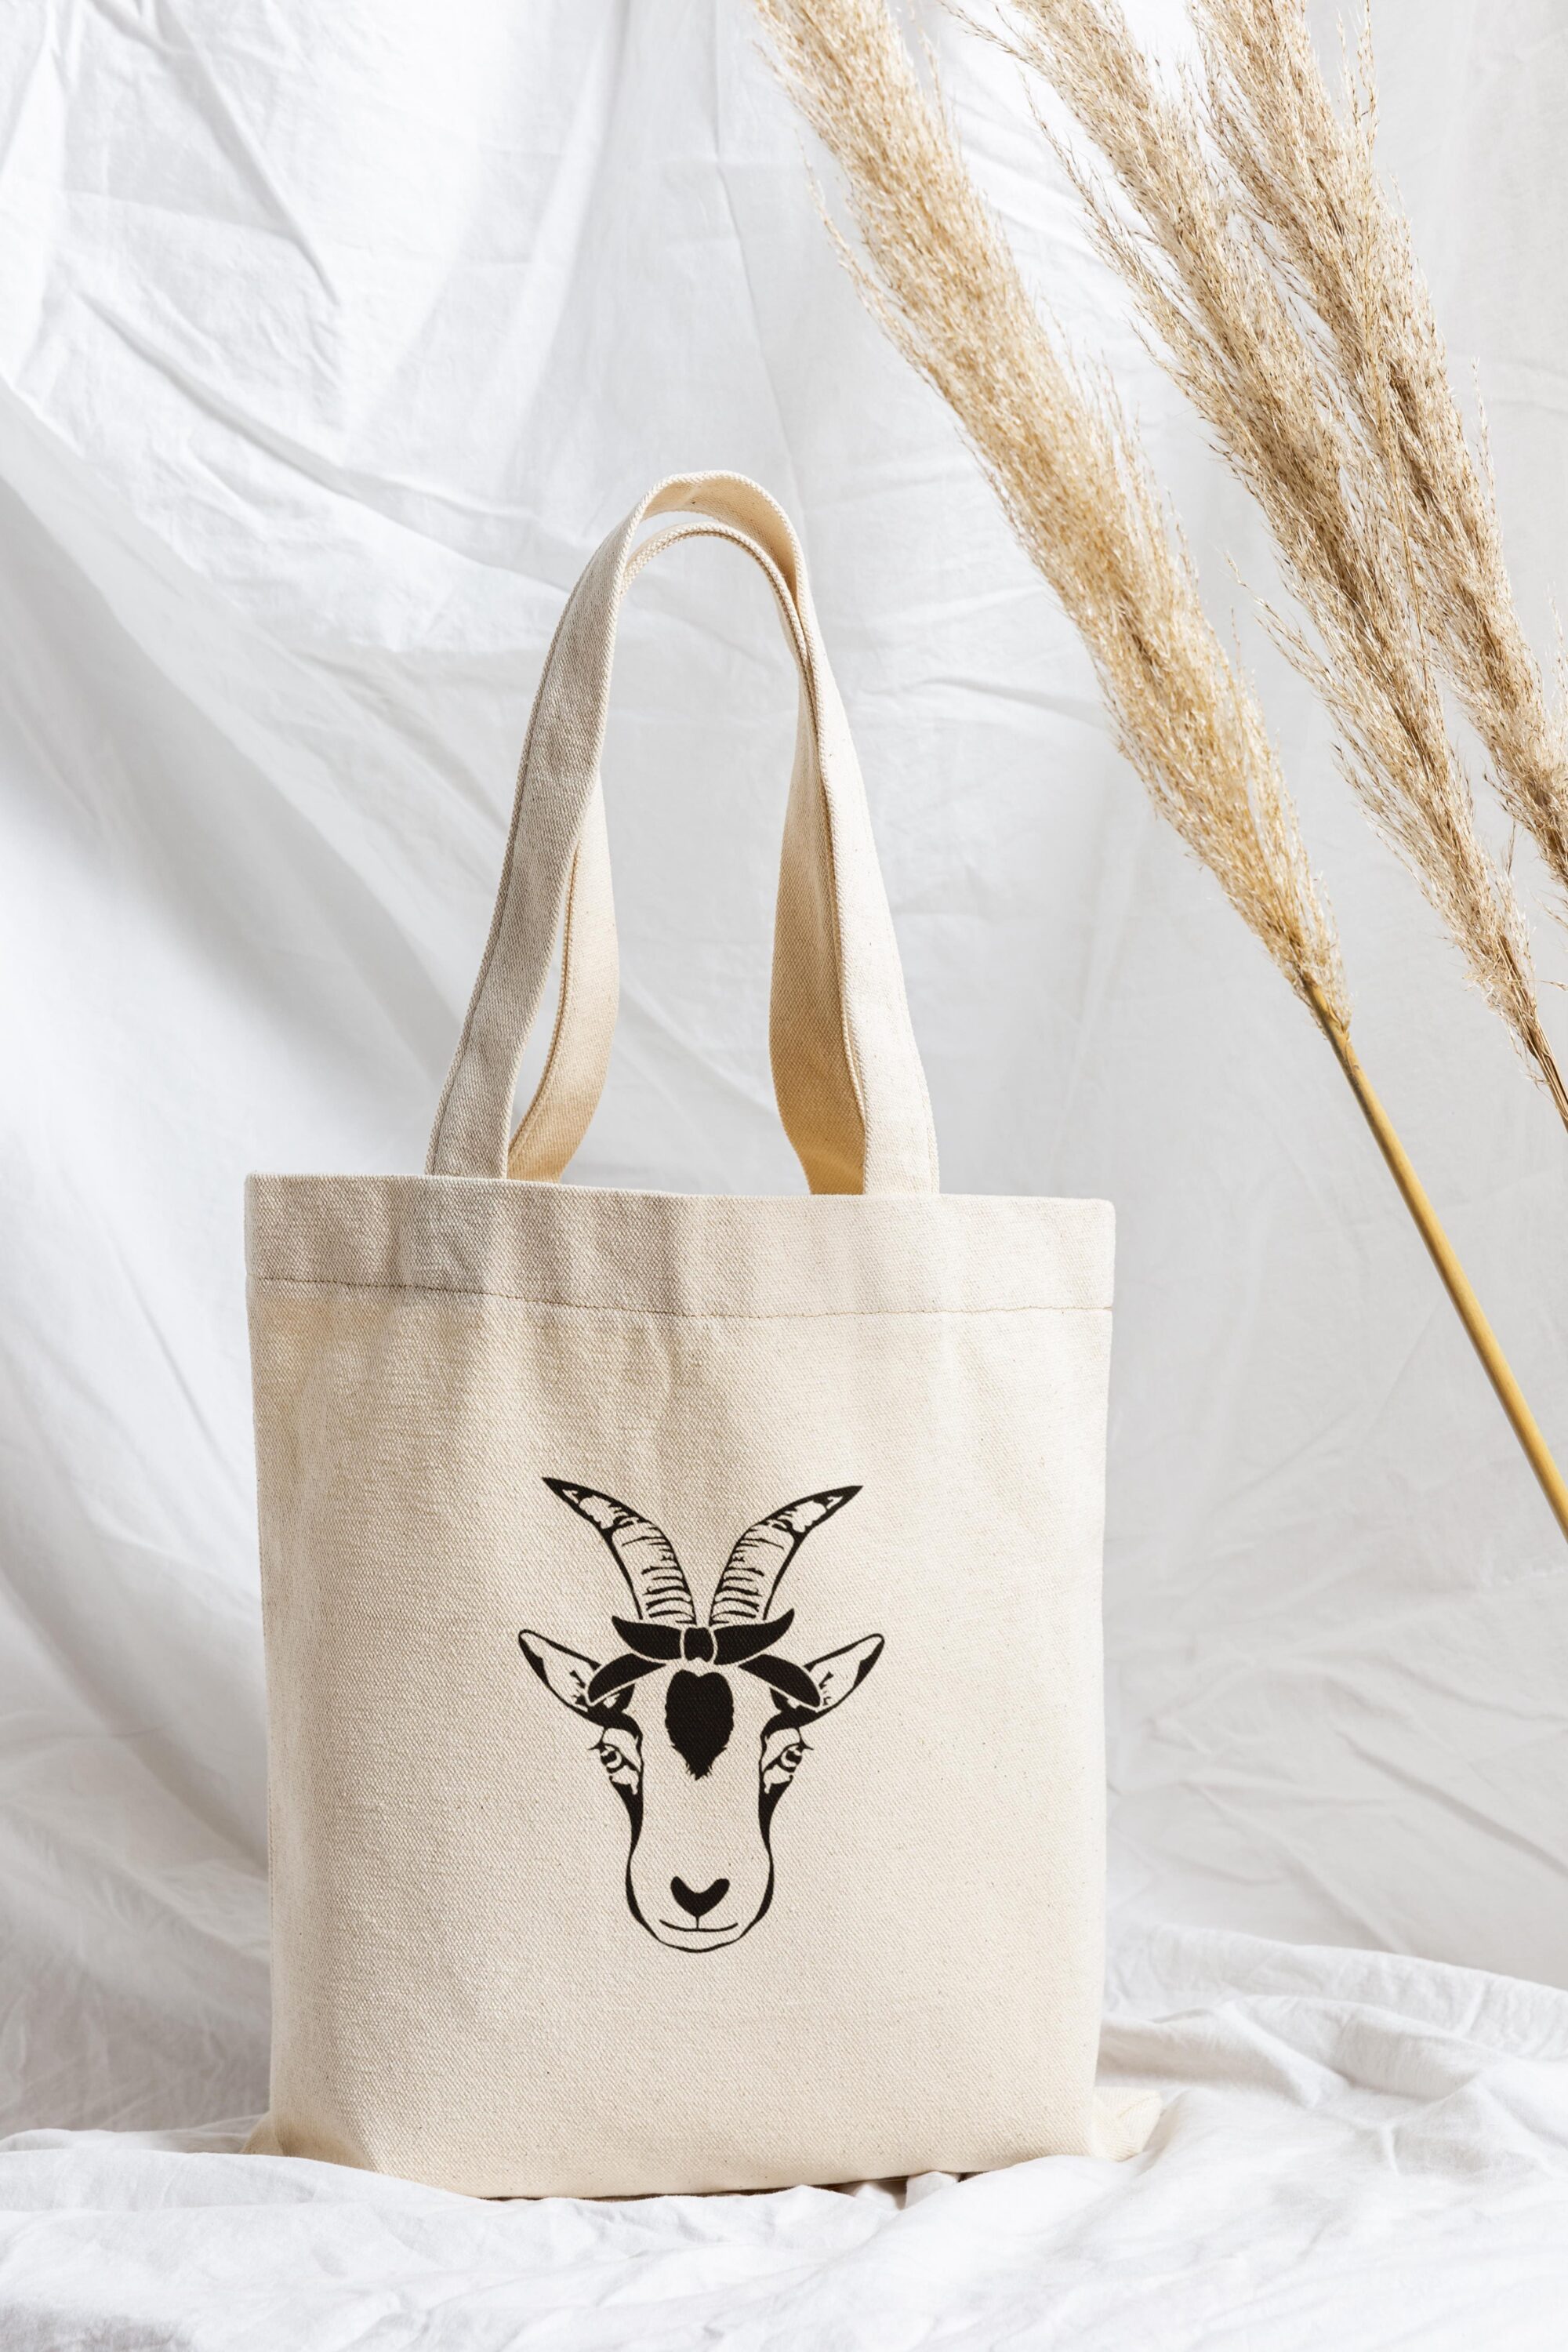 Goat Head whit Bandana Silhouette SVG goats feet Farm Milk 794S - eco bag in a classic shape.